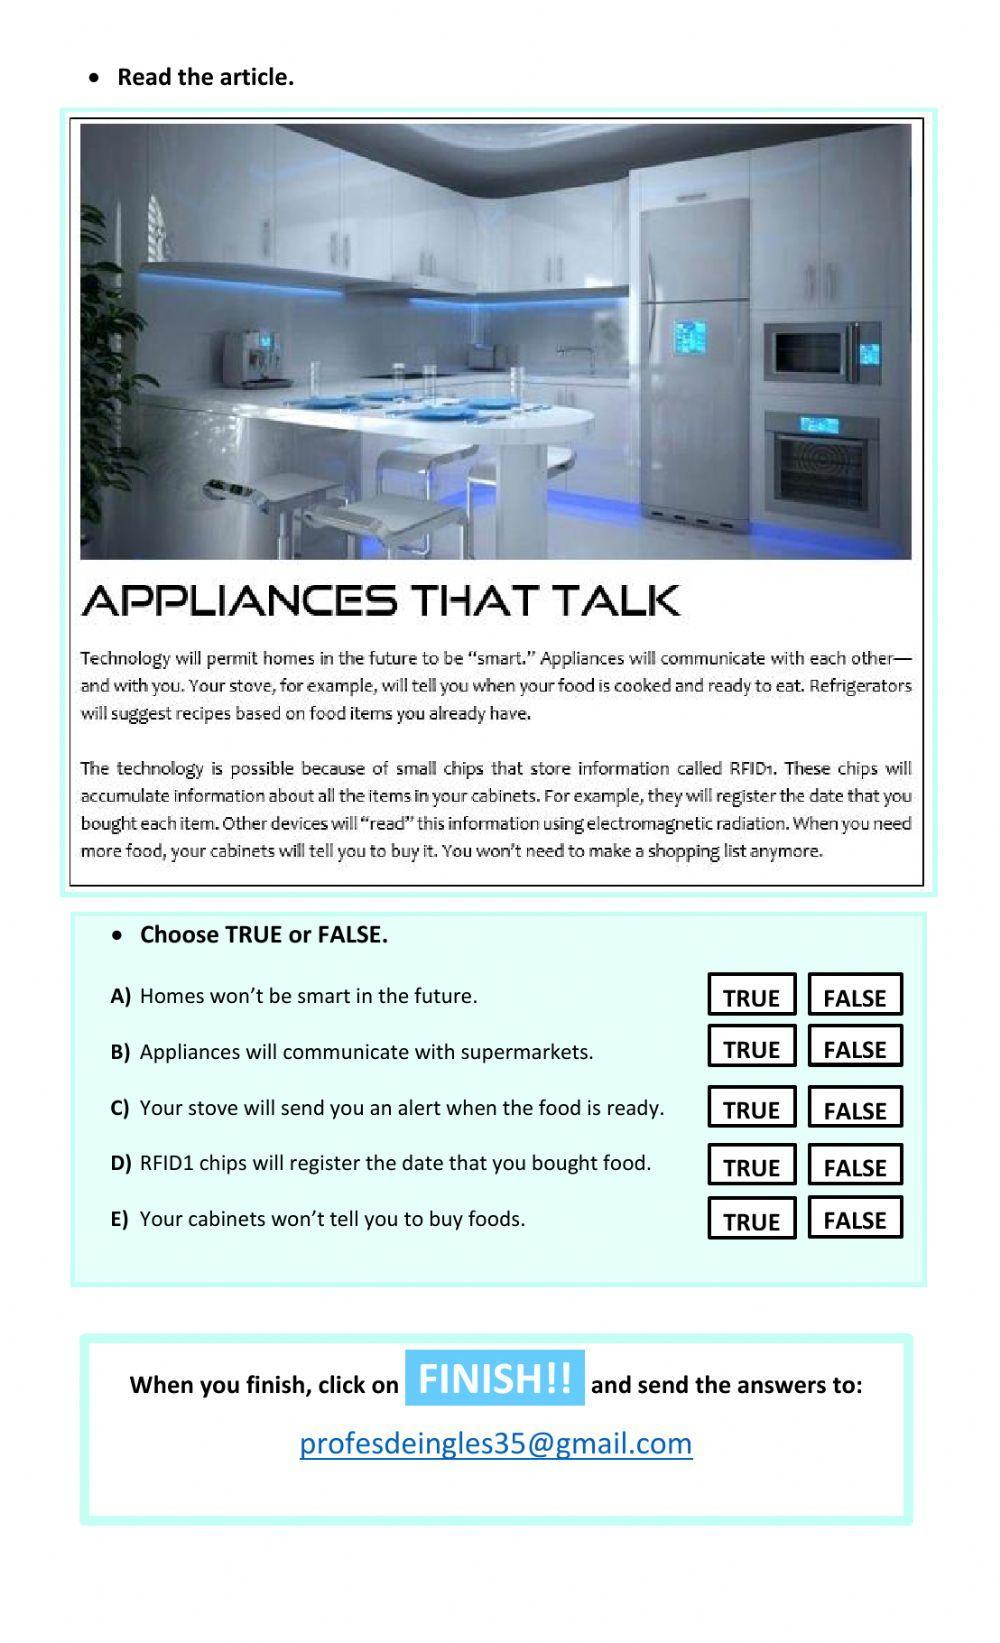 Appliances that talk